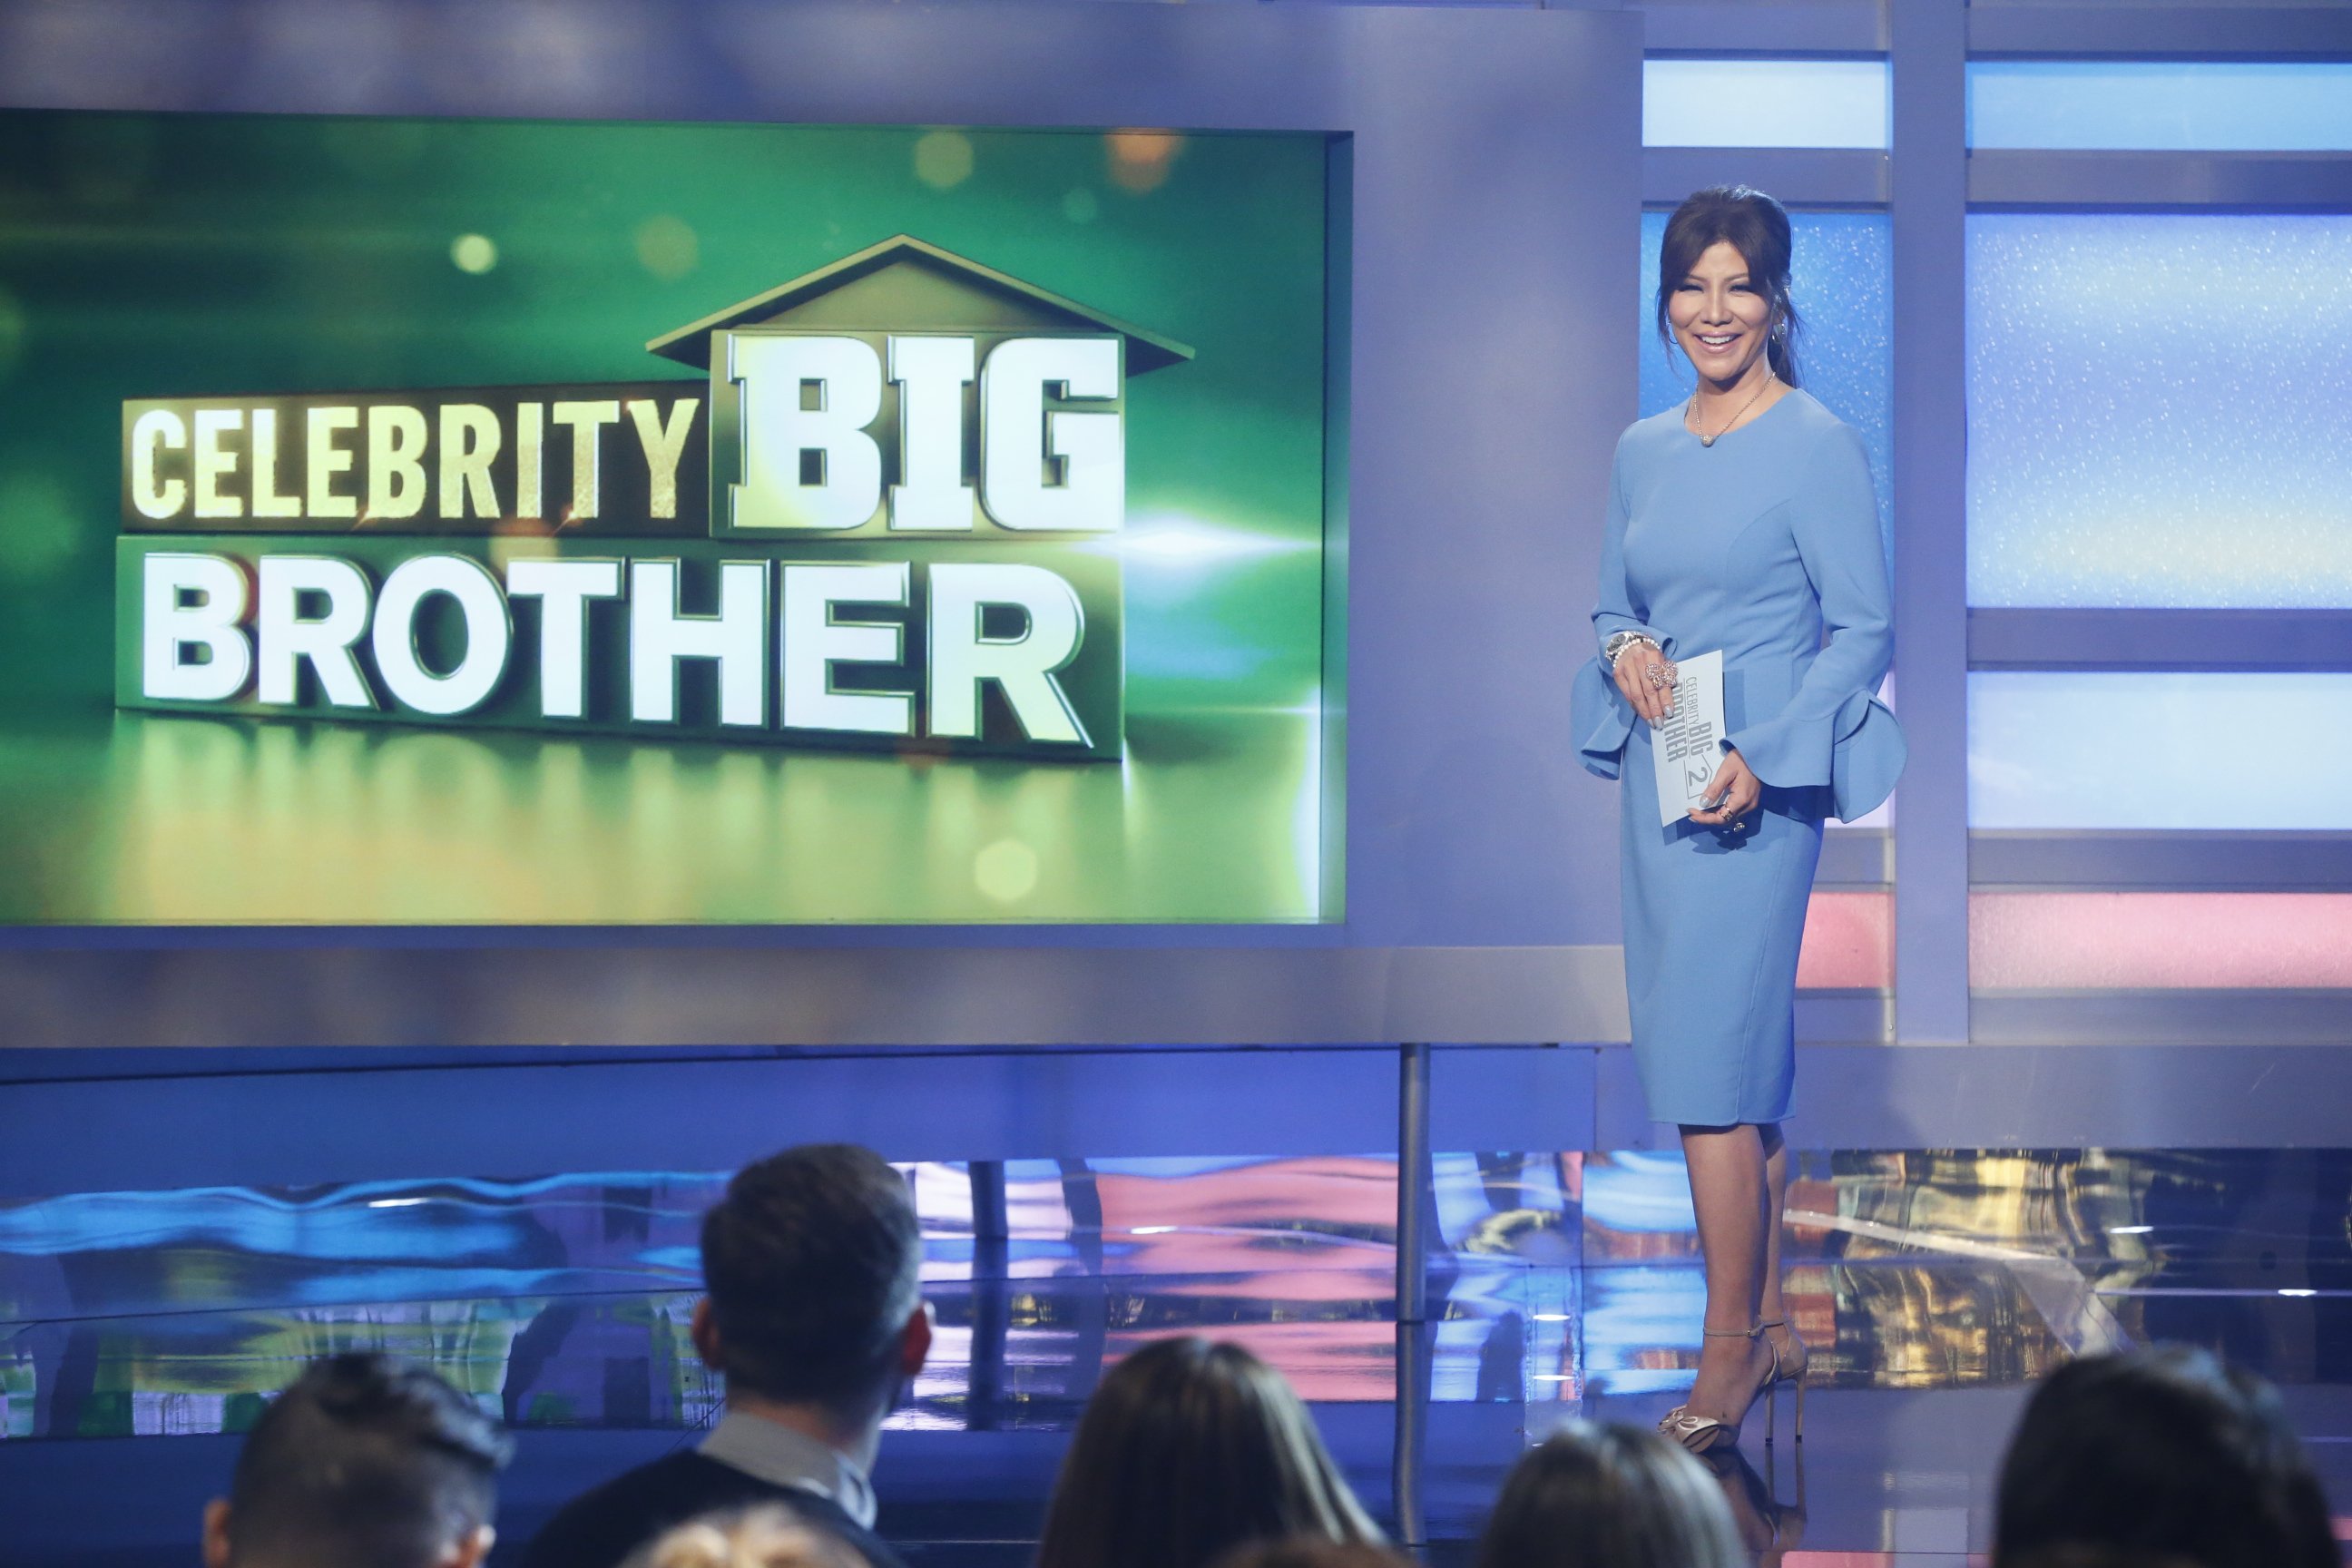 Julie Chen Moonves on stage smiling during 'Celebrity Big Brother'